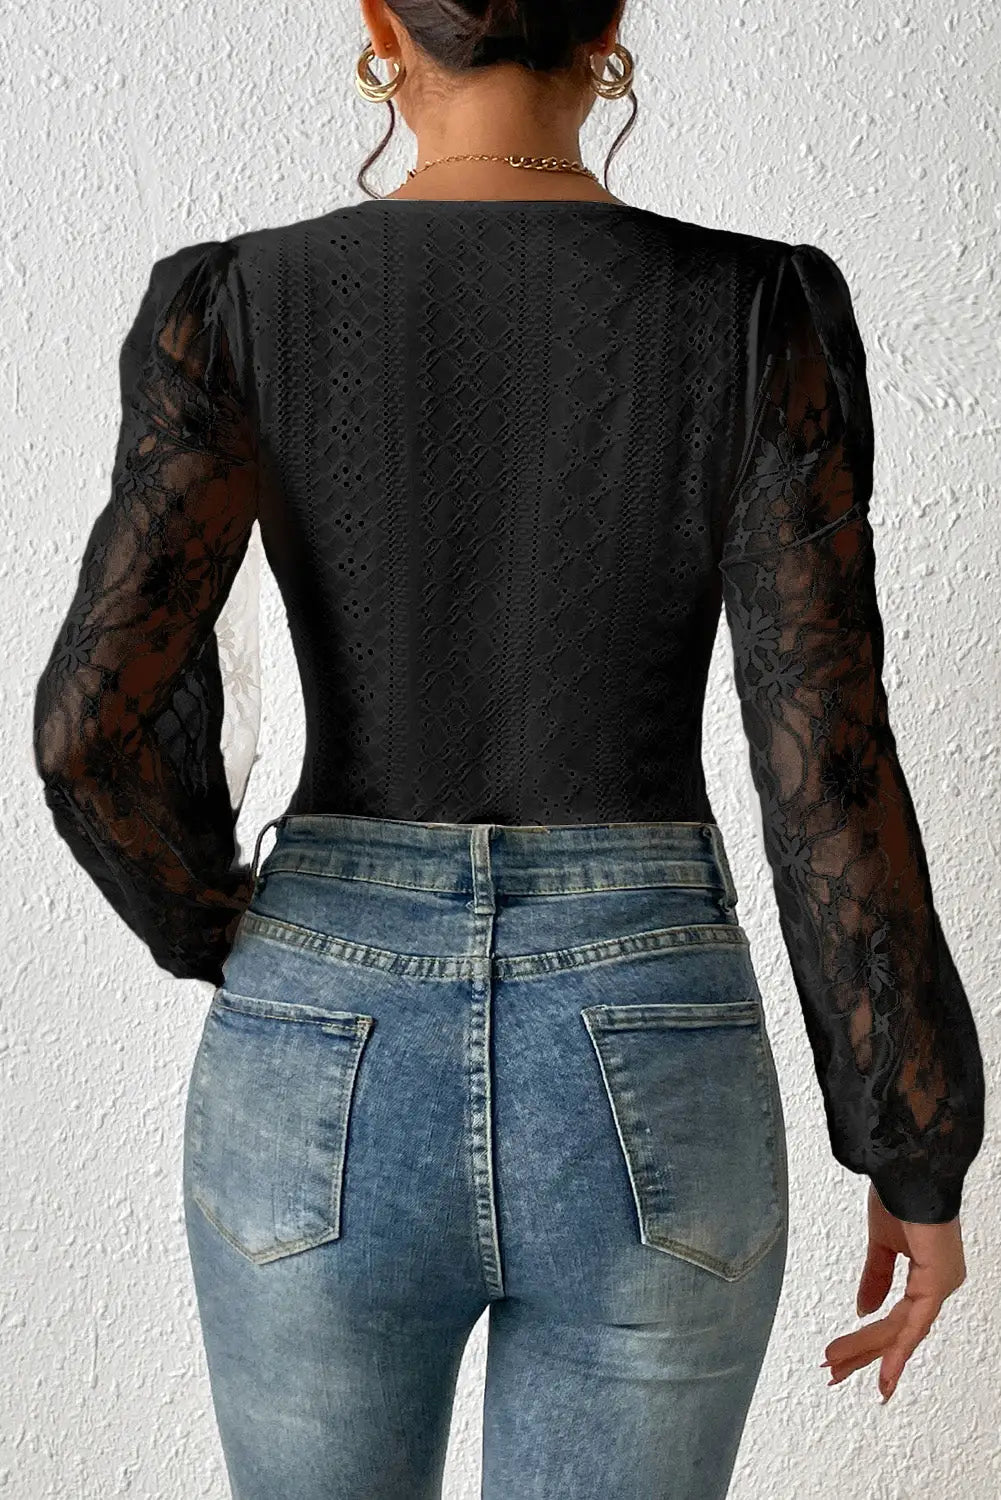 Black frenchy contrast lace bishop sleeve bodysuit - bodysuits